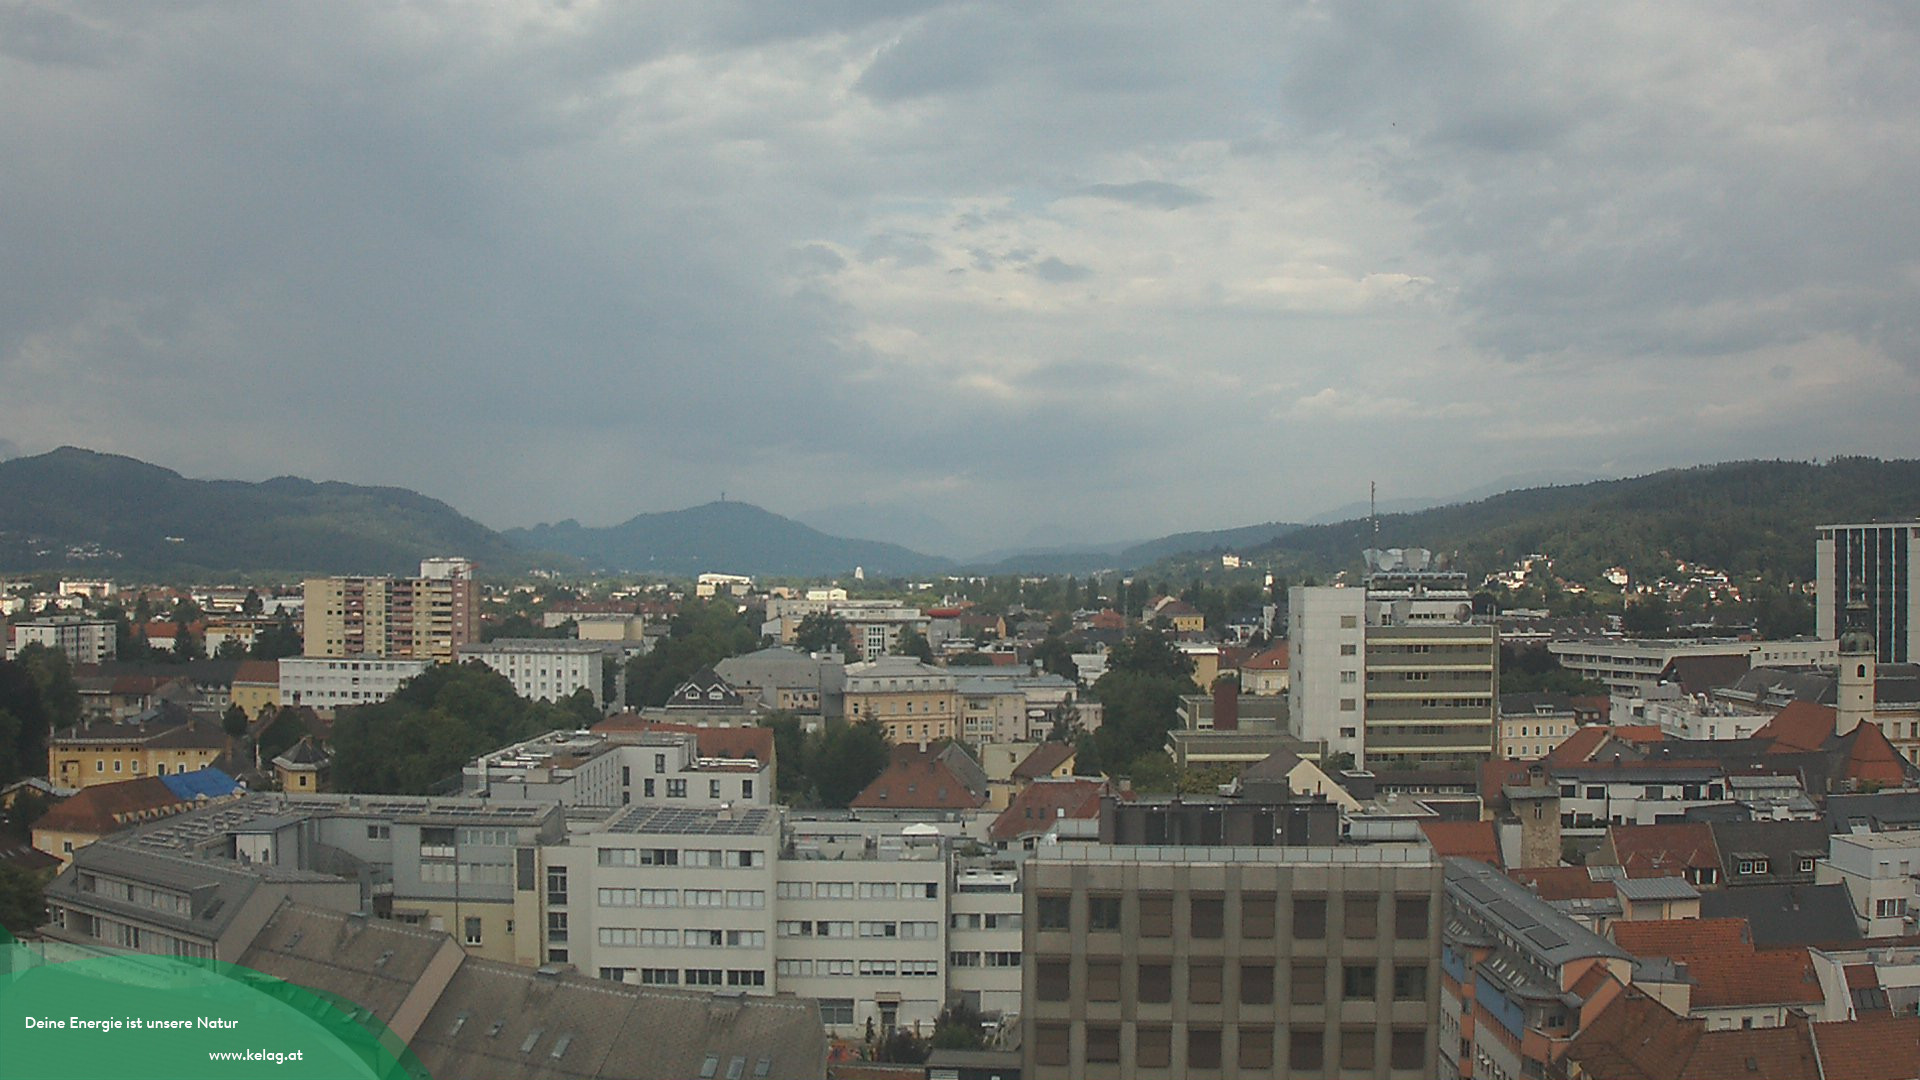 Klagenfurt So. 08:46